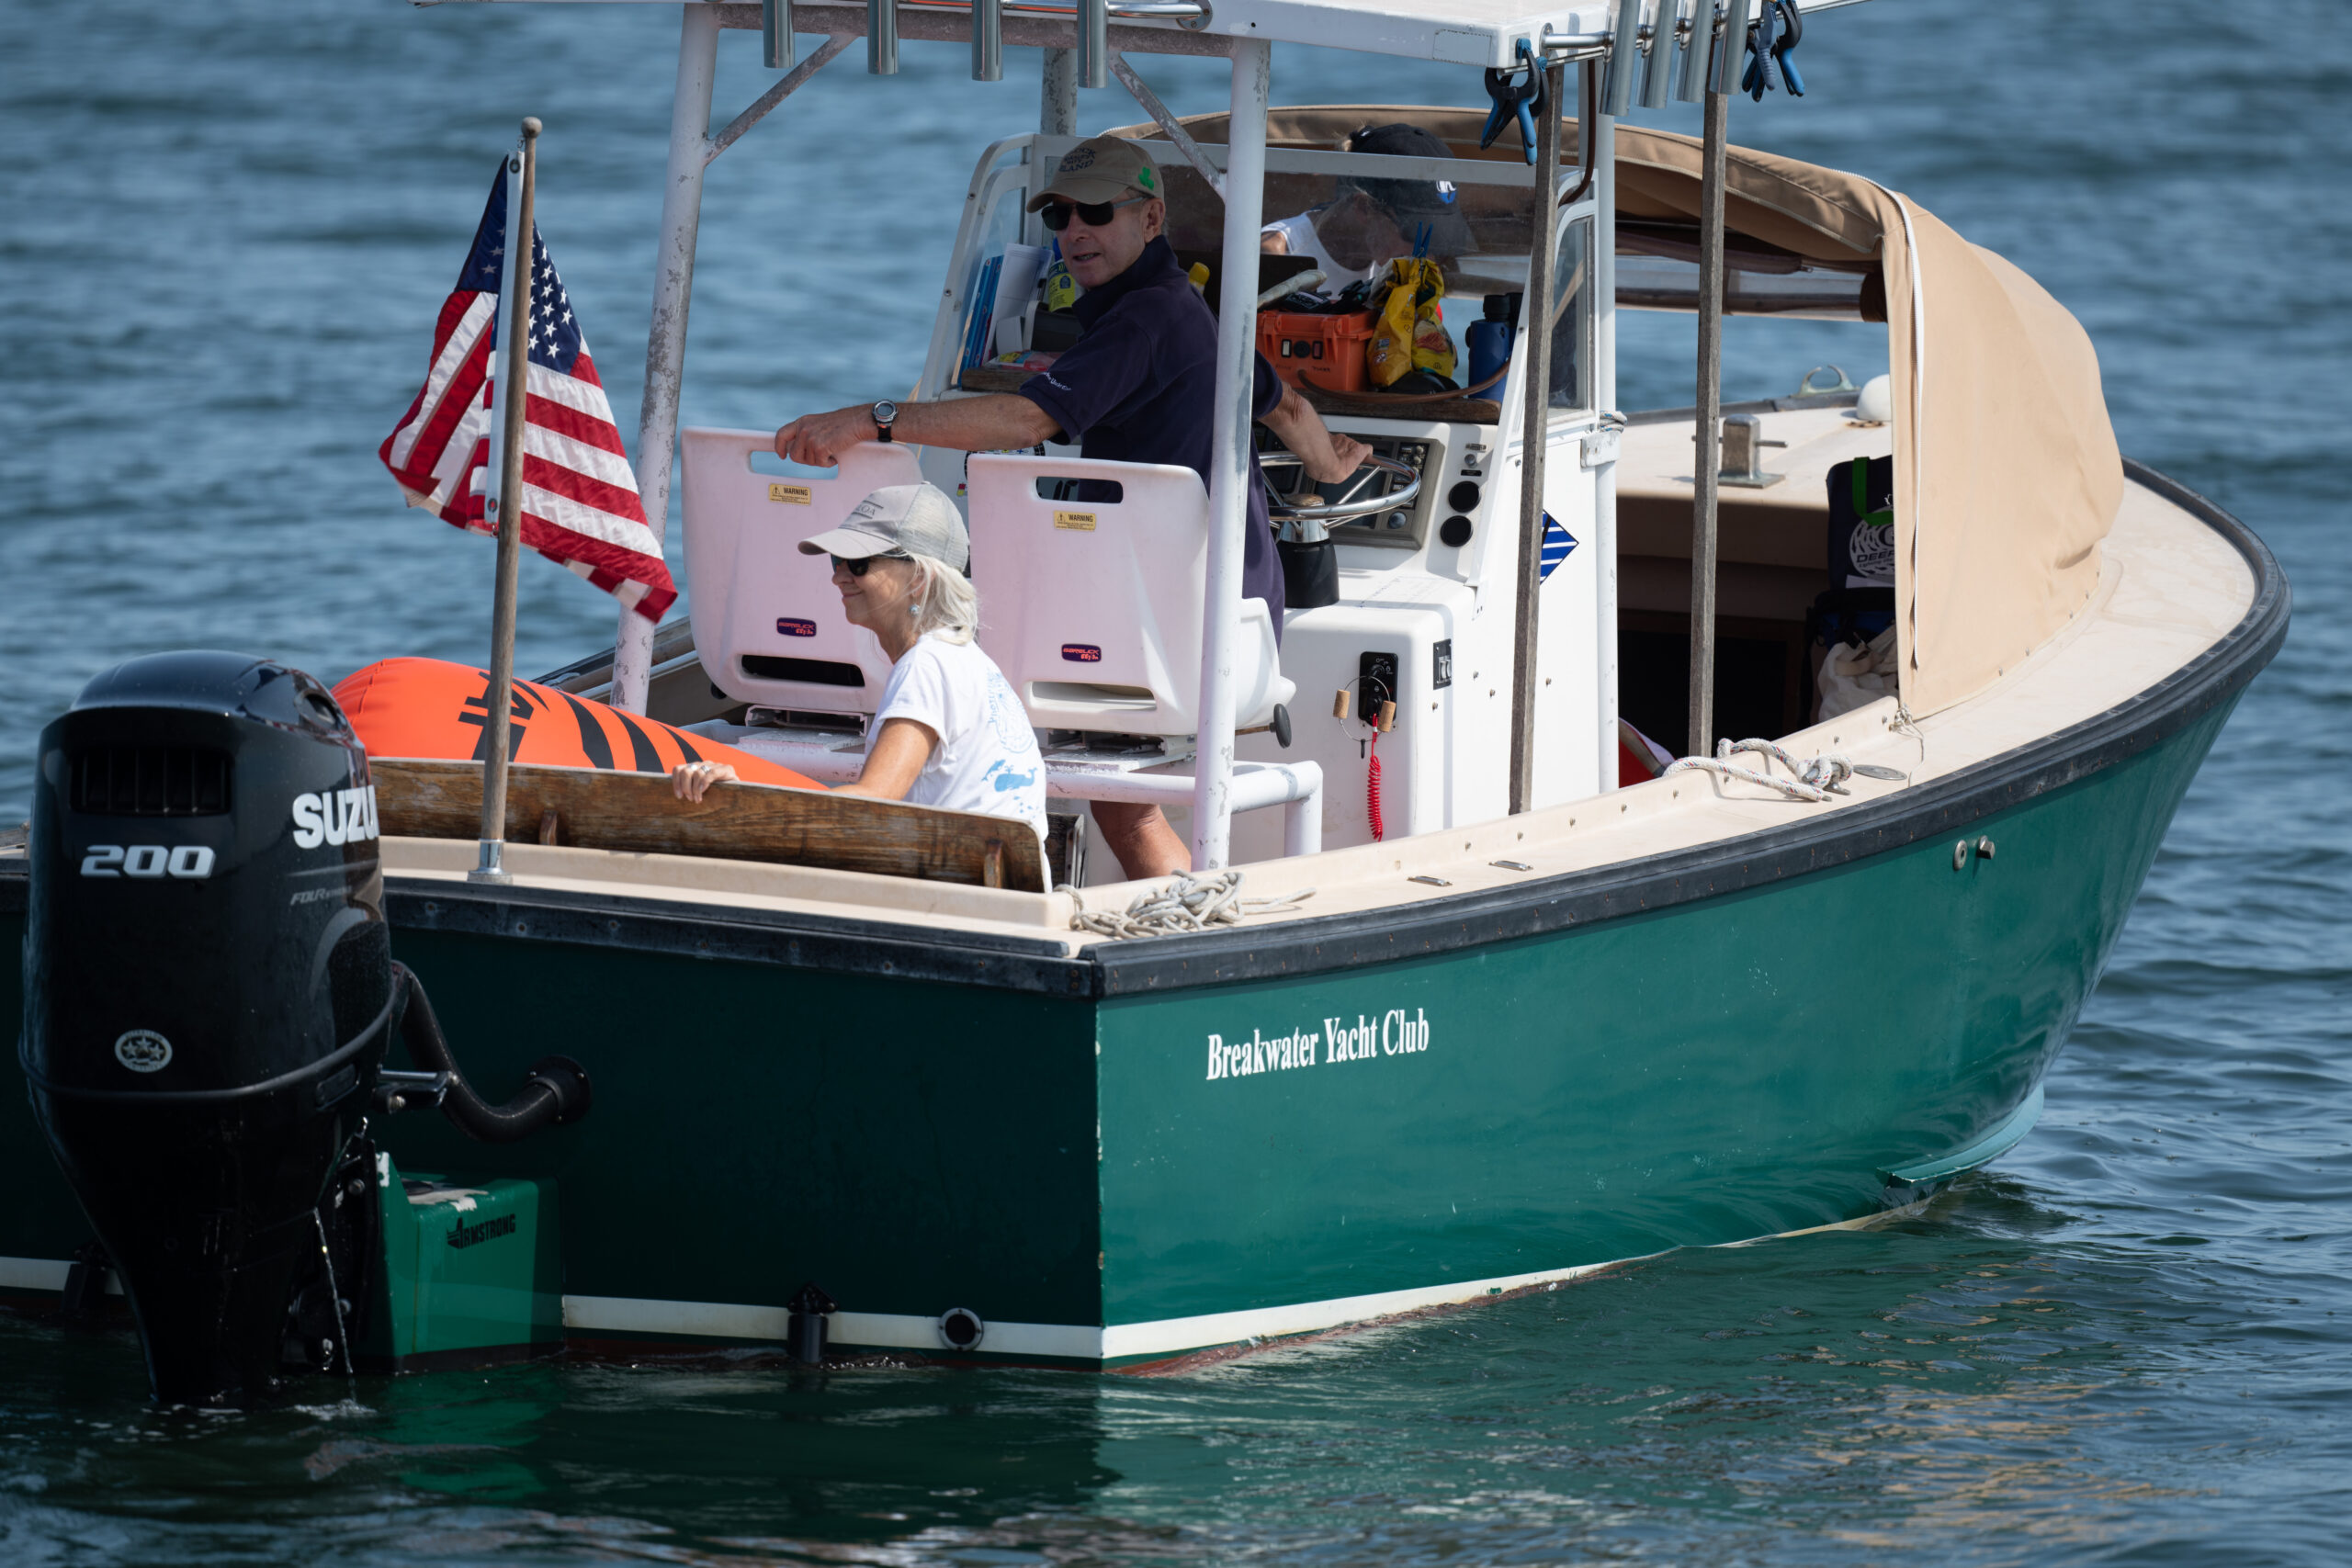 The Breakwater Yacht Club race committee boat.       GARY SENFT/EASTENDMARINEPHOTOGRAPHY.COM